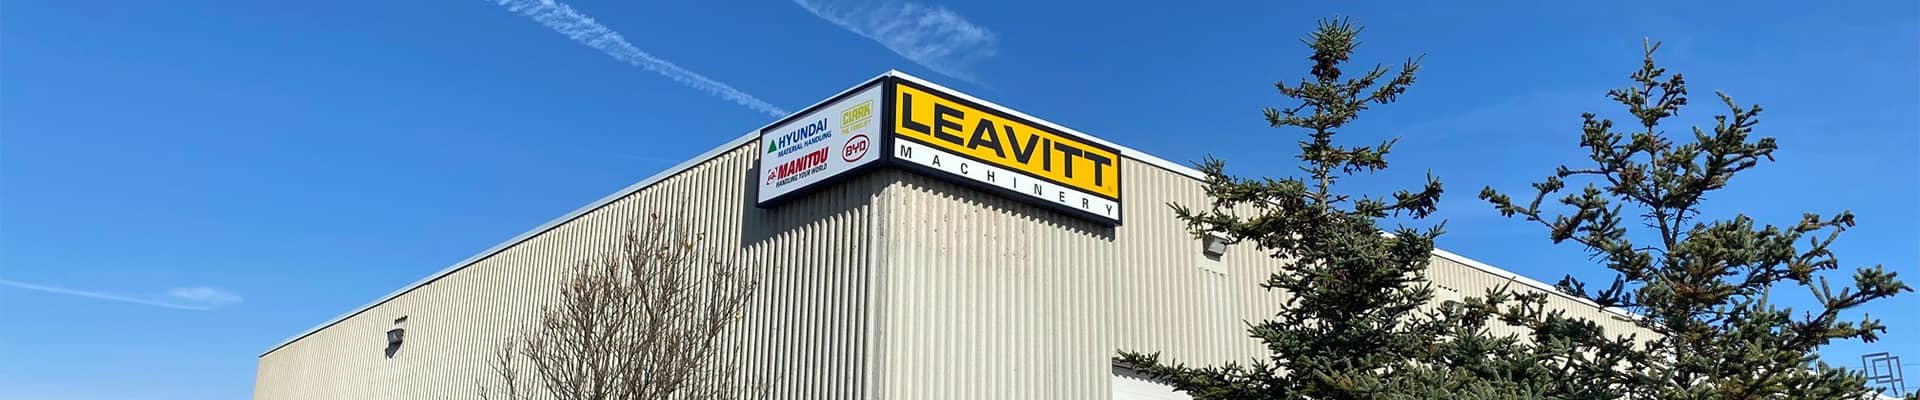 Leavitt Machinery London branch